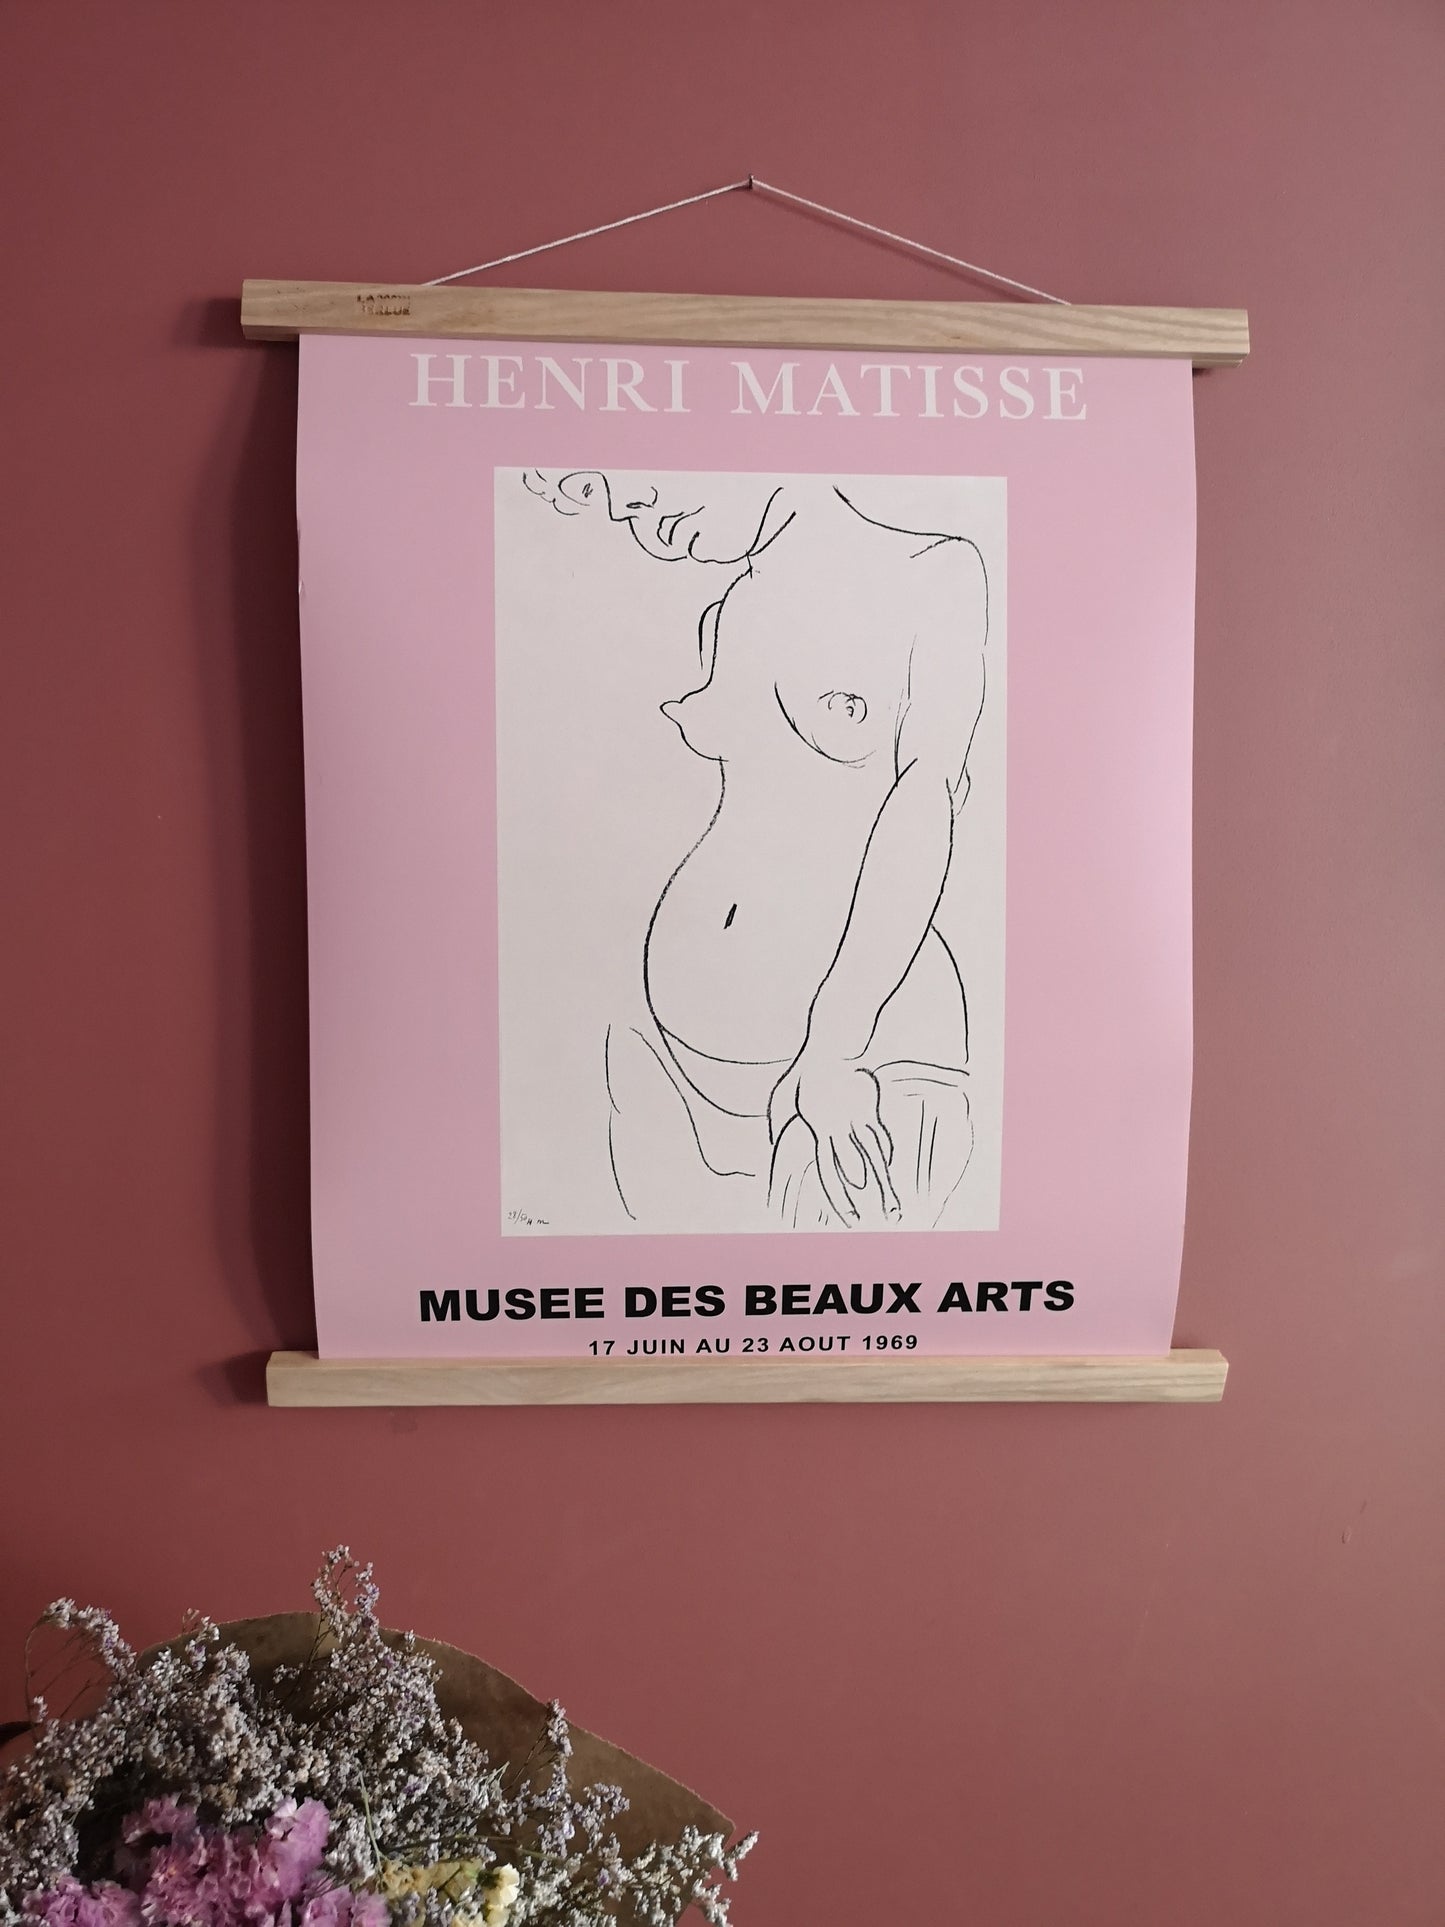 Illustration Matisse rose - The Printable Concept